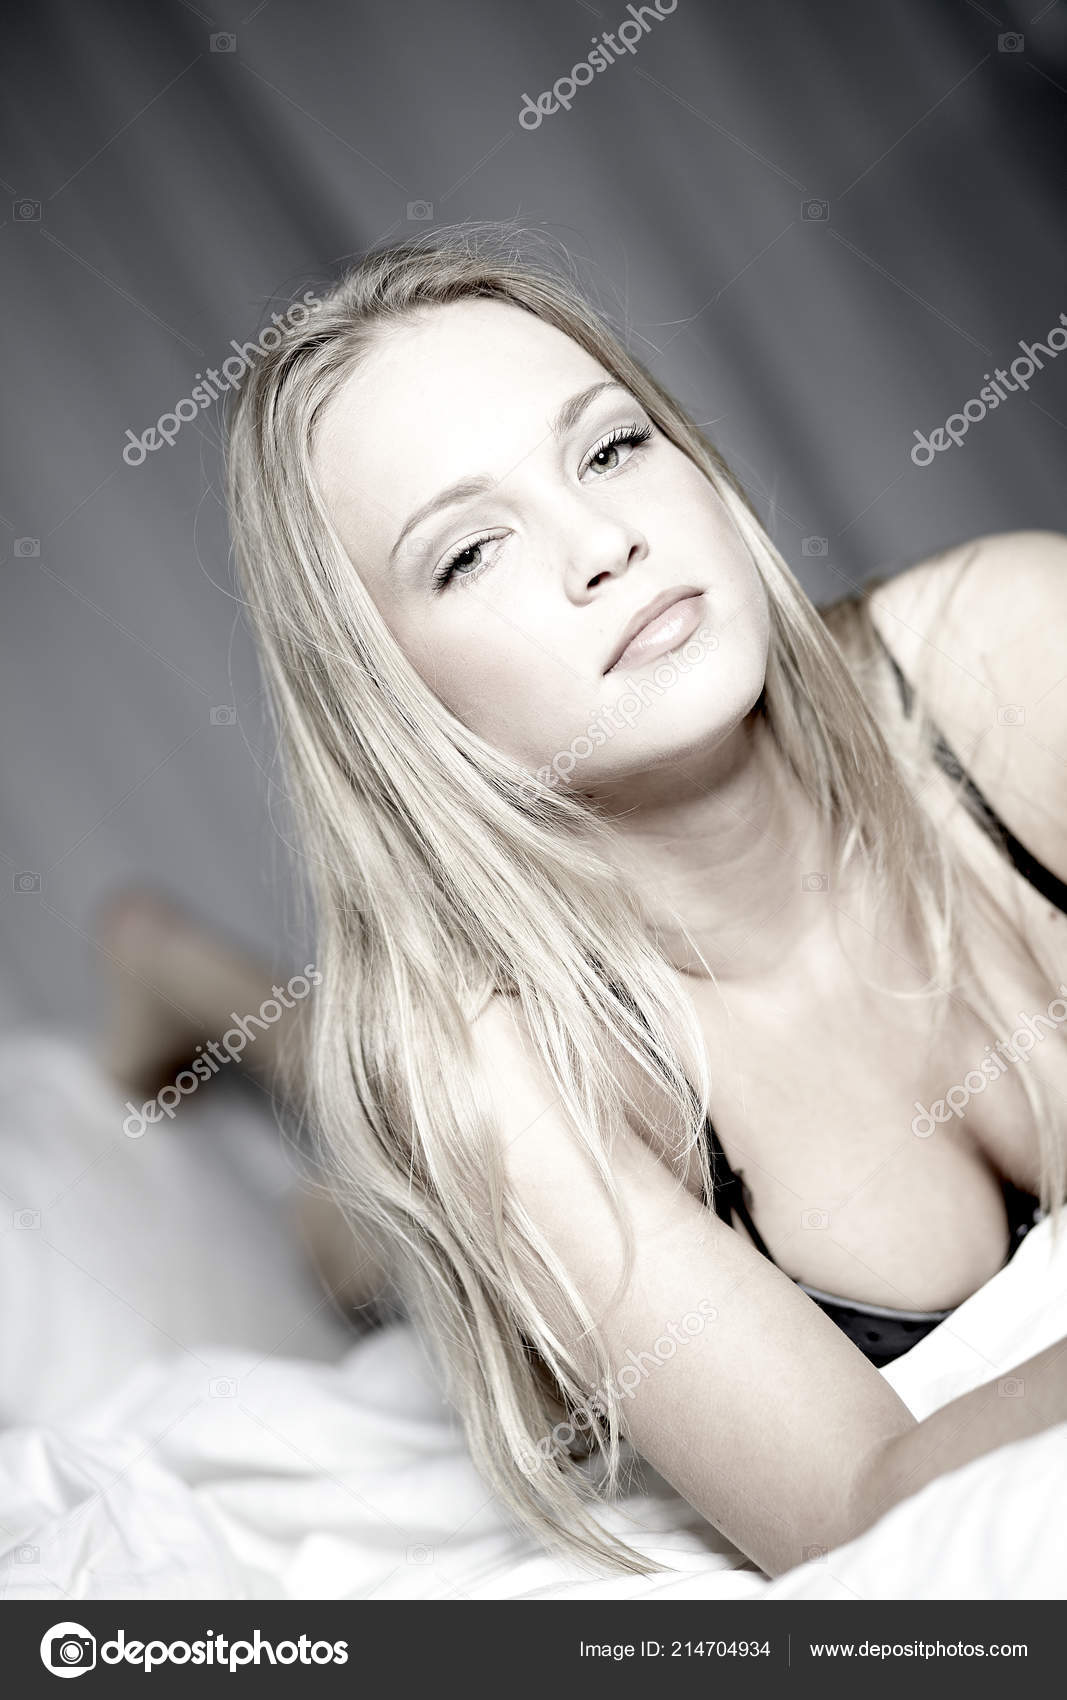 Premium Photo  Blond woman in underwear lying on bed